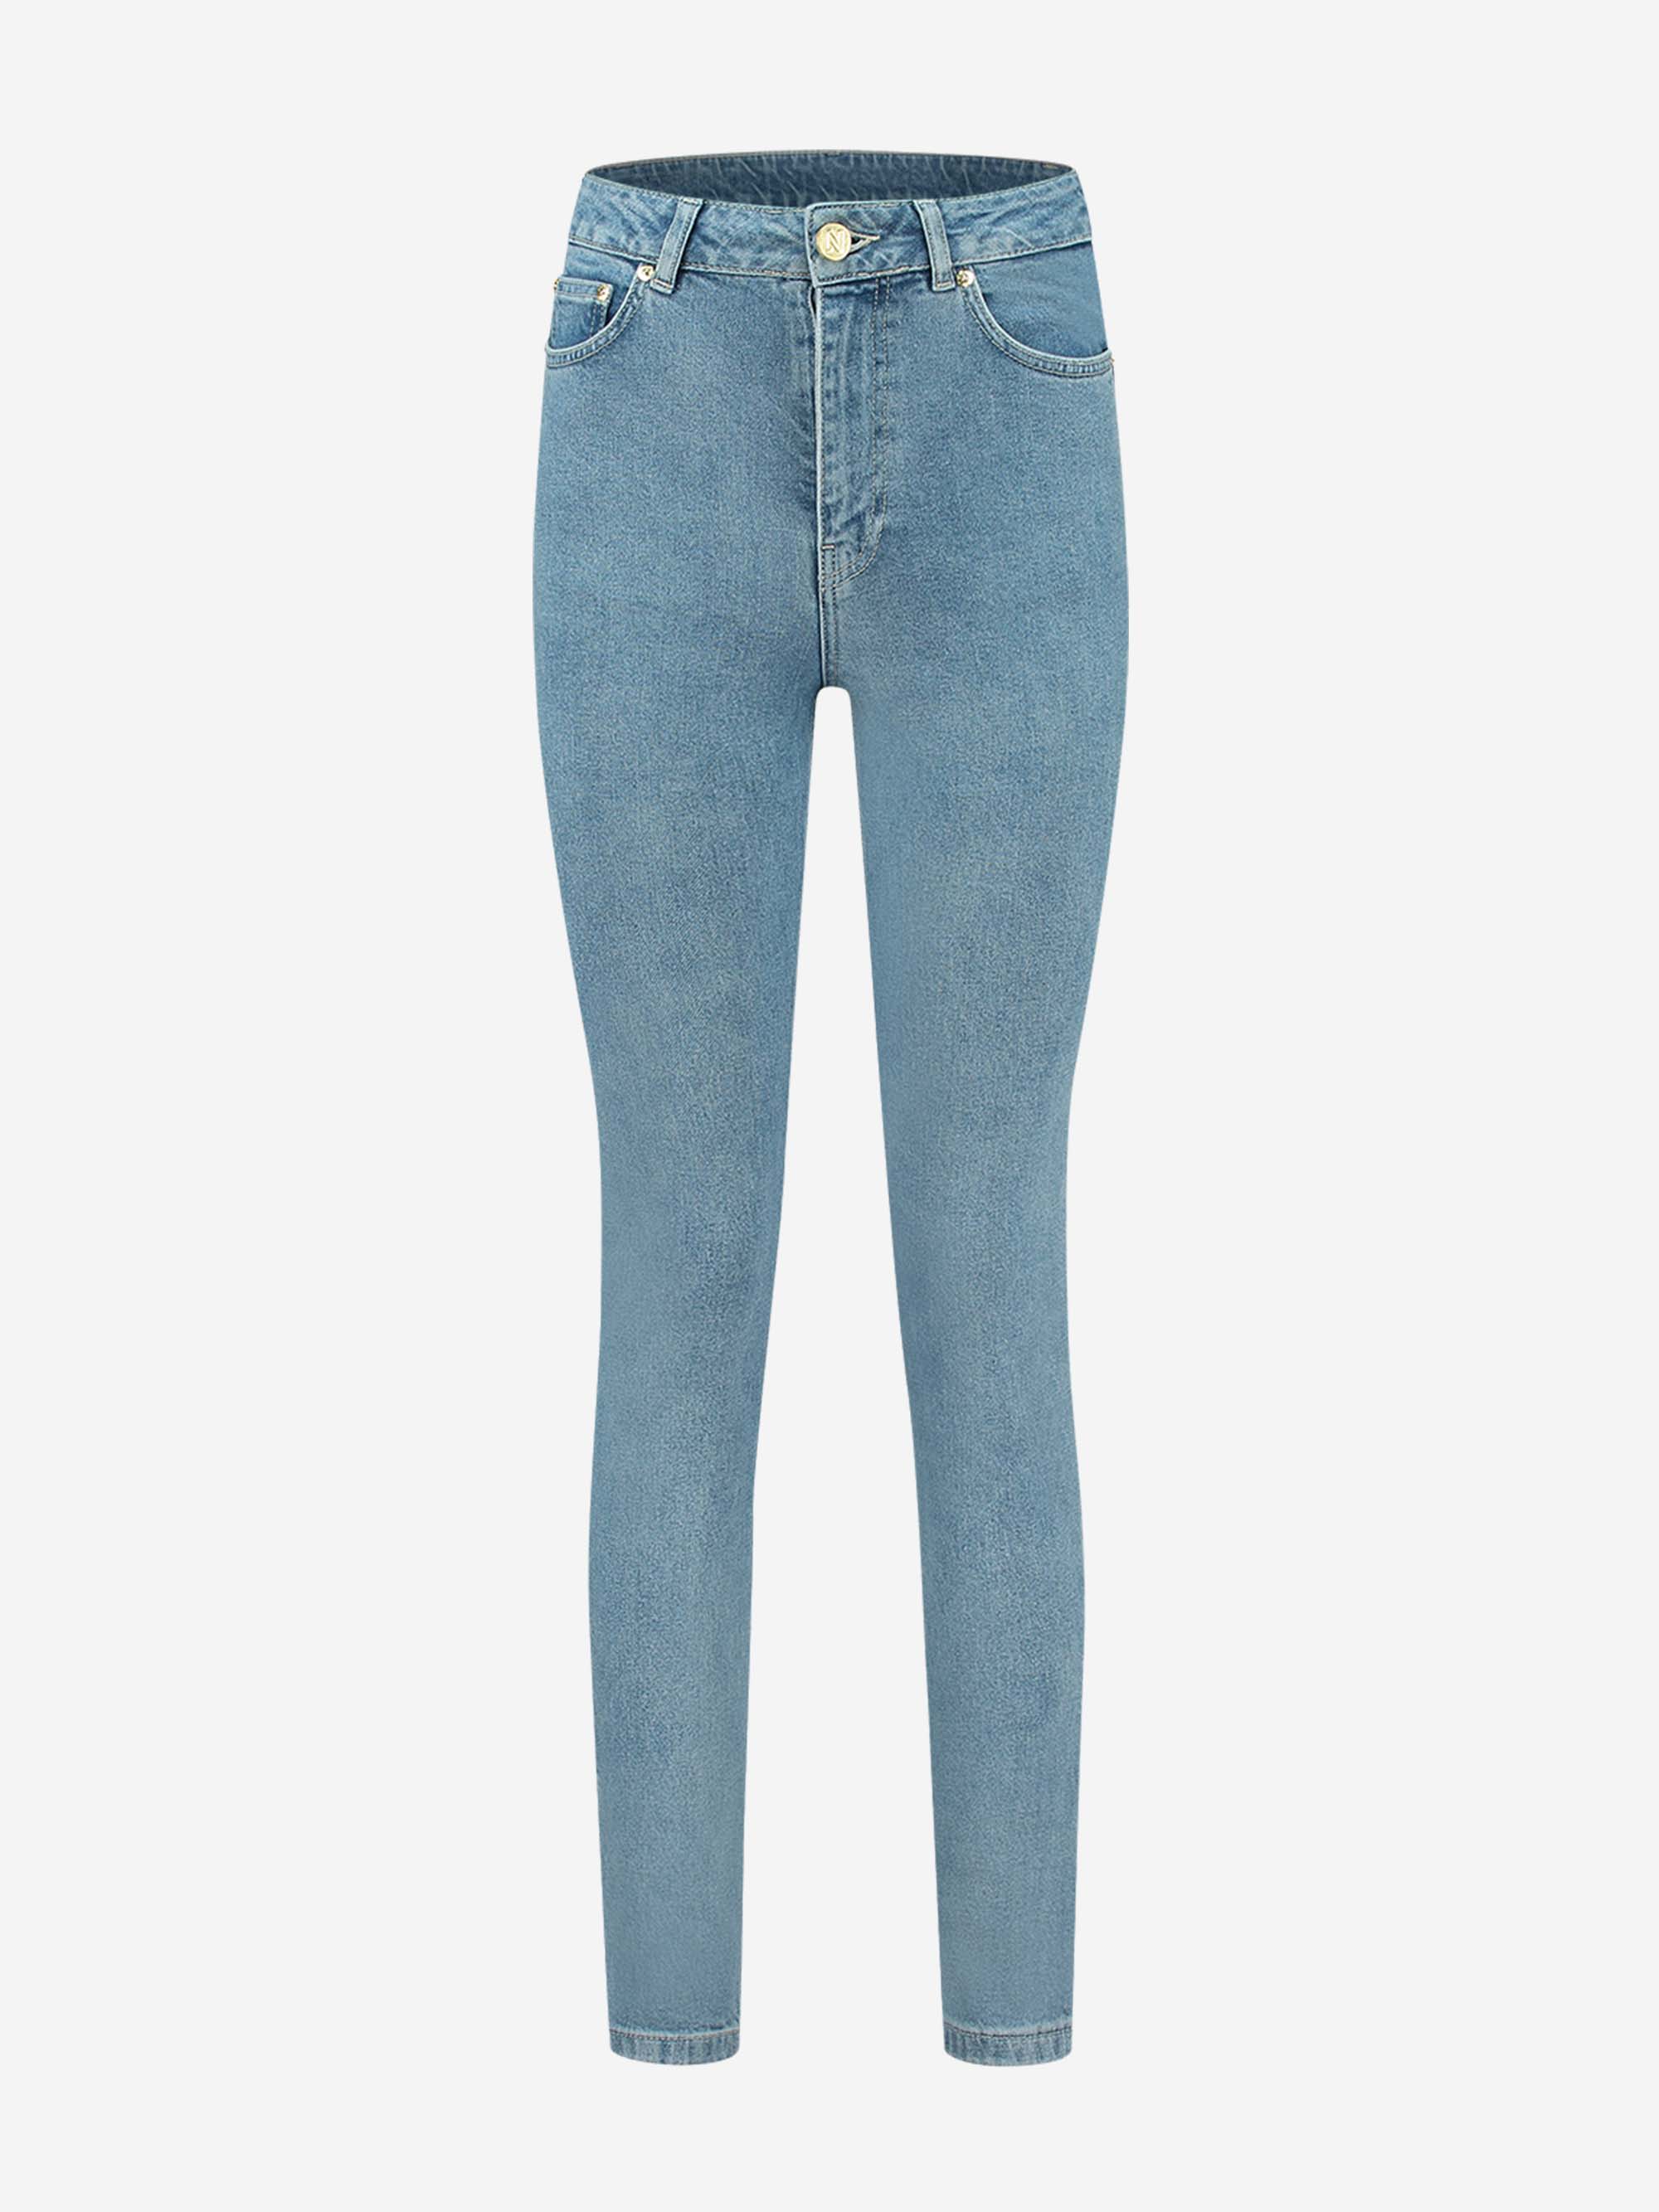 High rise skinny denim jeans